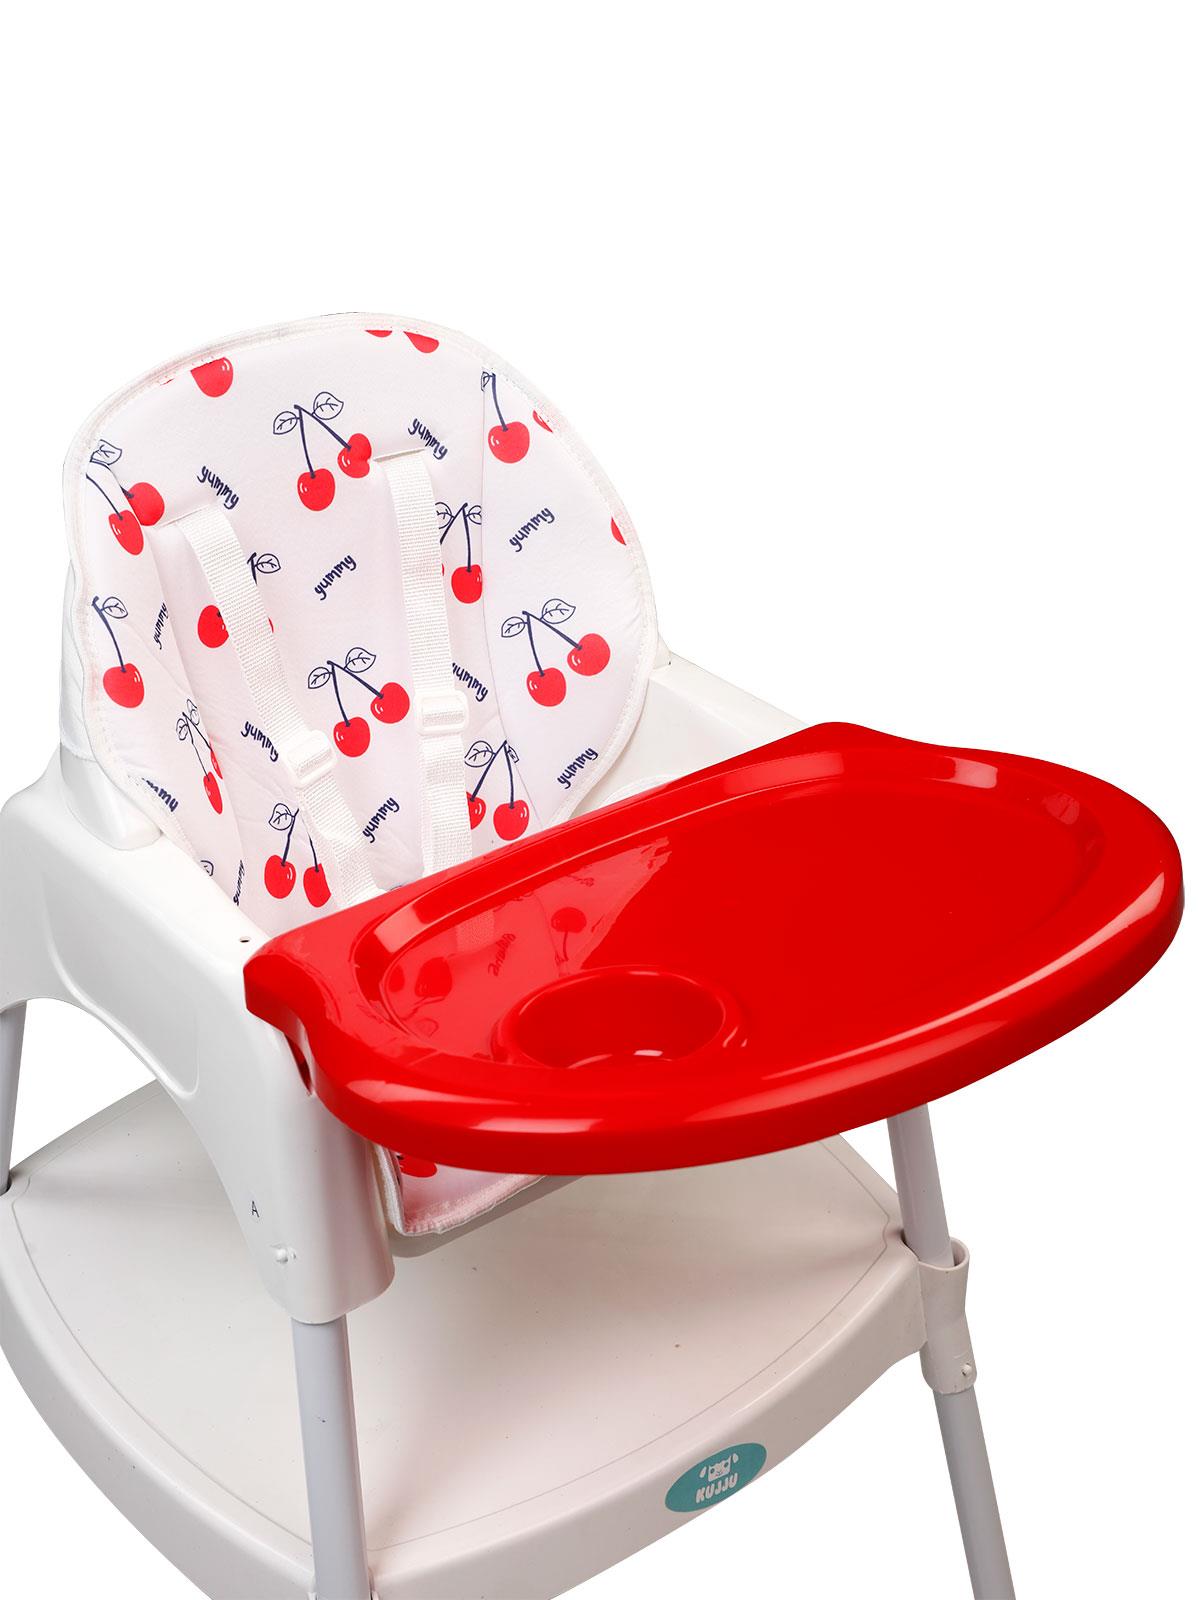 Kujju Minderli Mama Sandalyesi Kırmızı